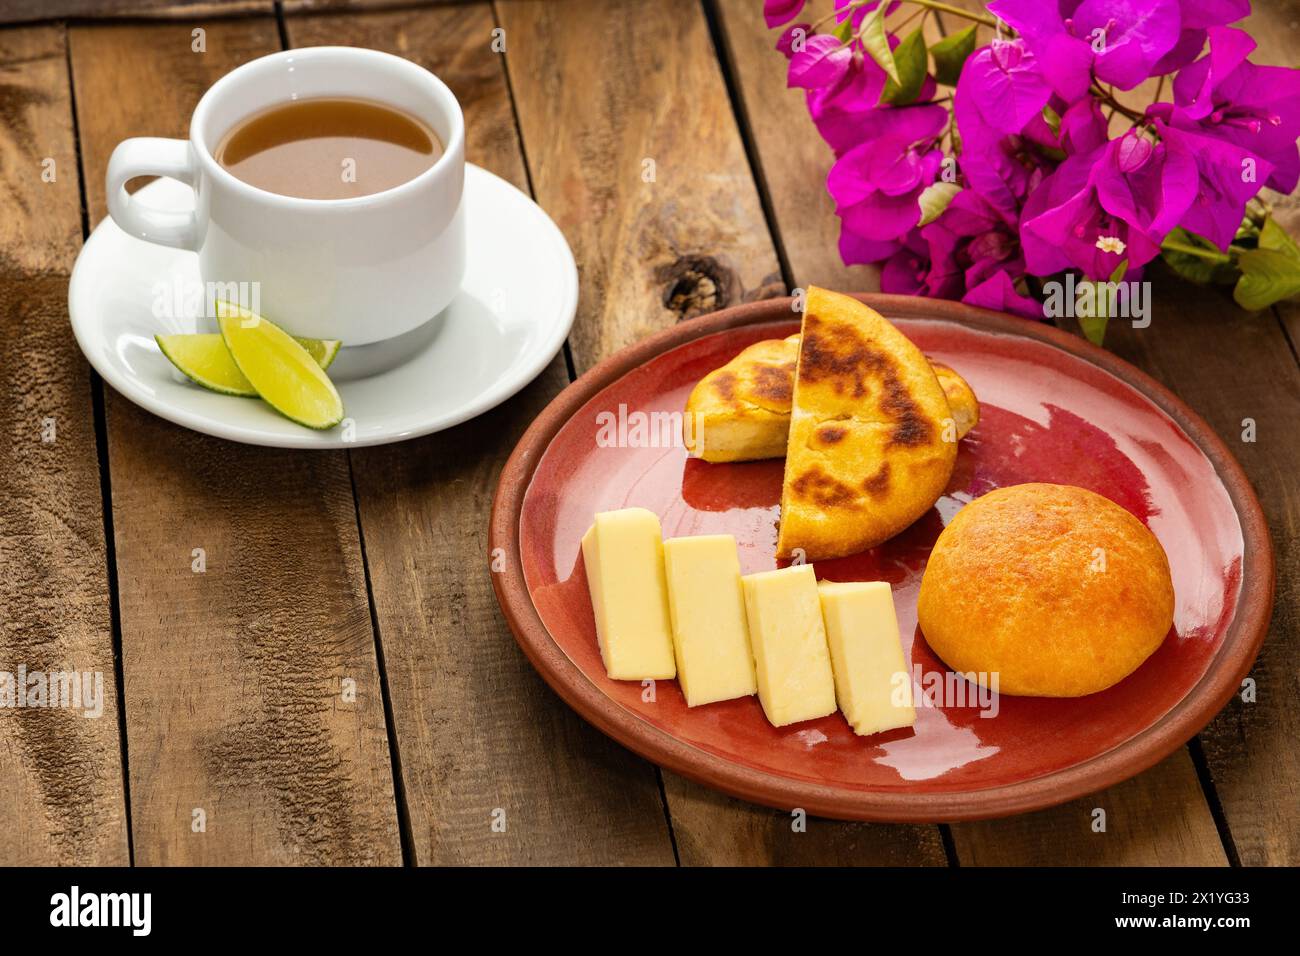 Breakfast served at the table - Arepa, almojabana, cheese and hot aguapanela. Colombian gastronomy Stock Photo